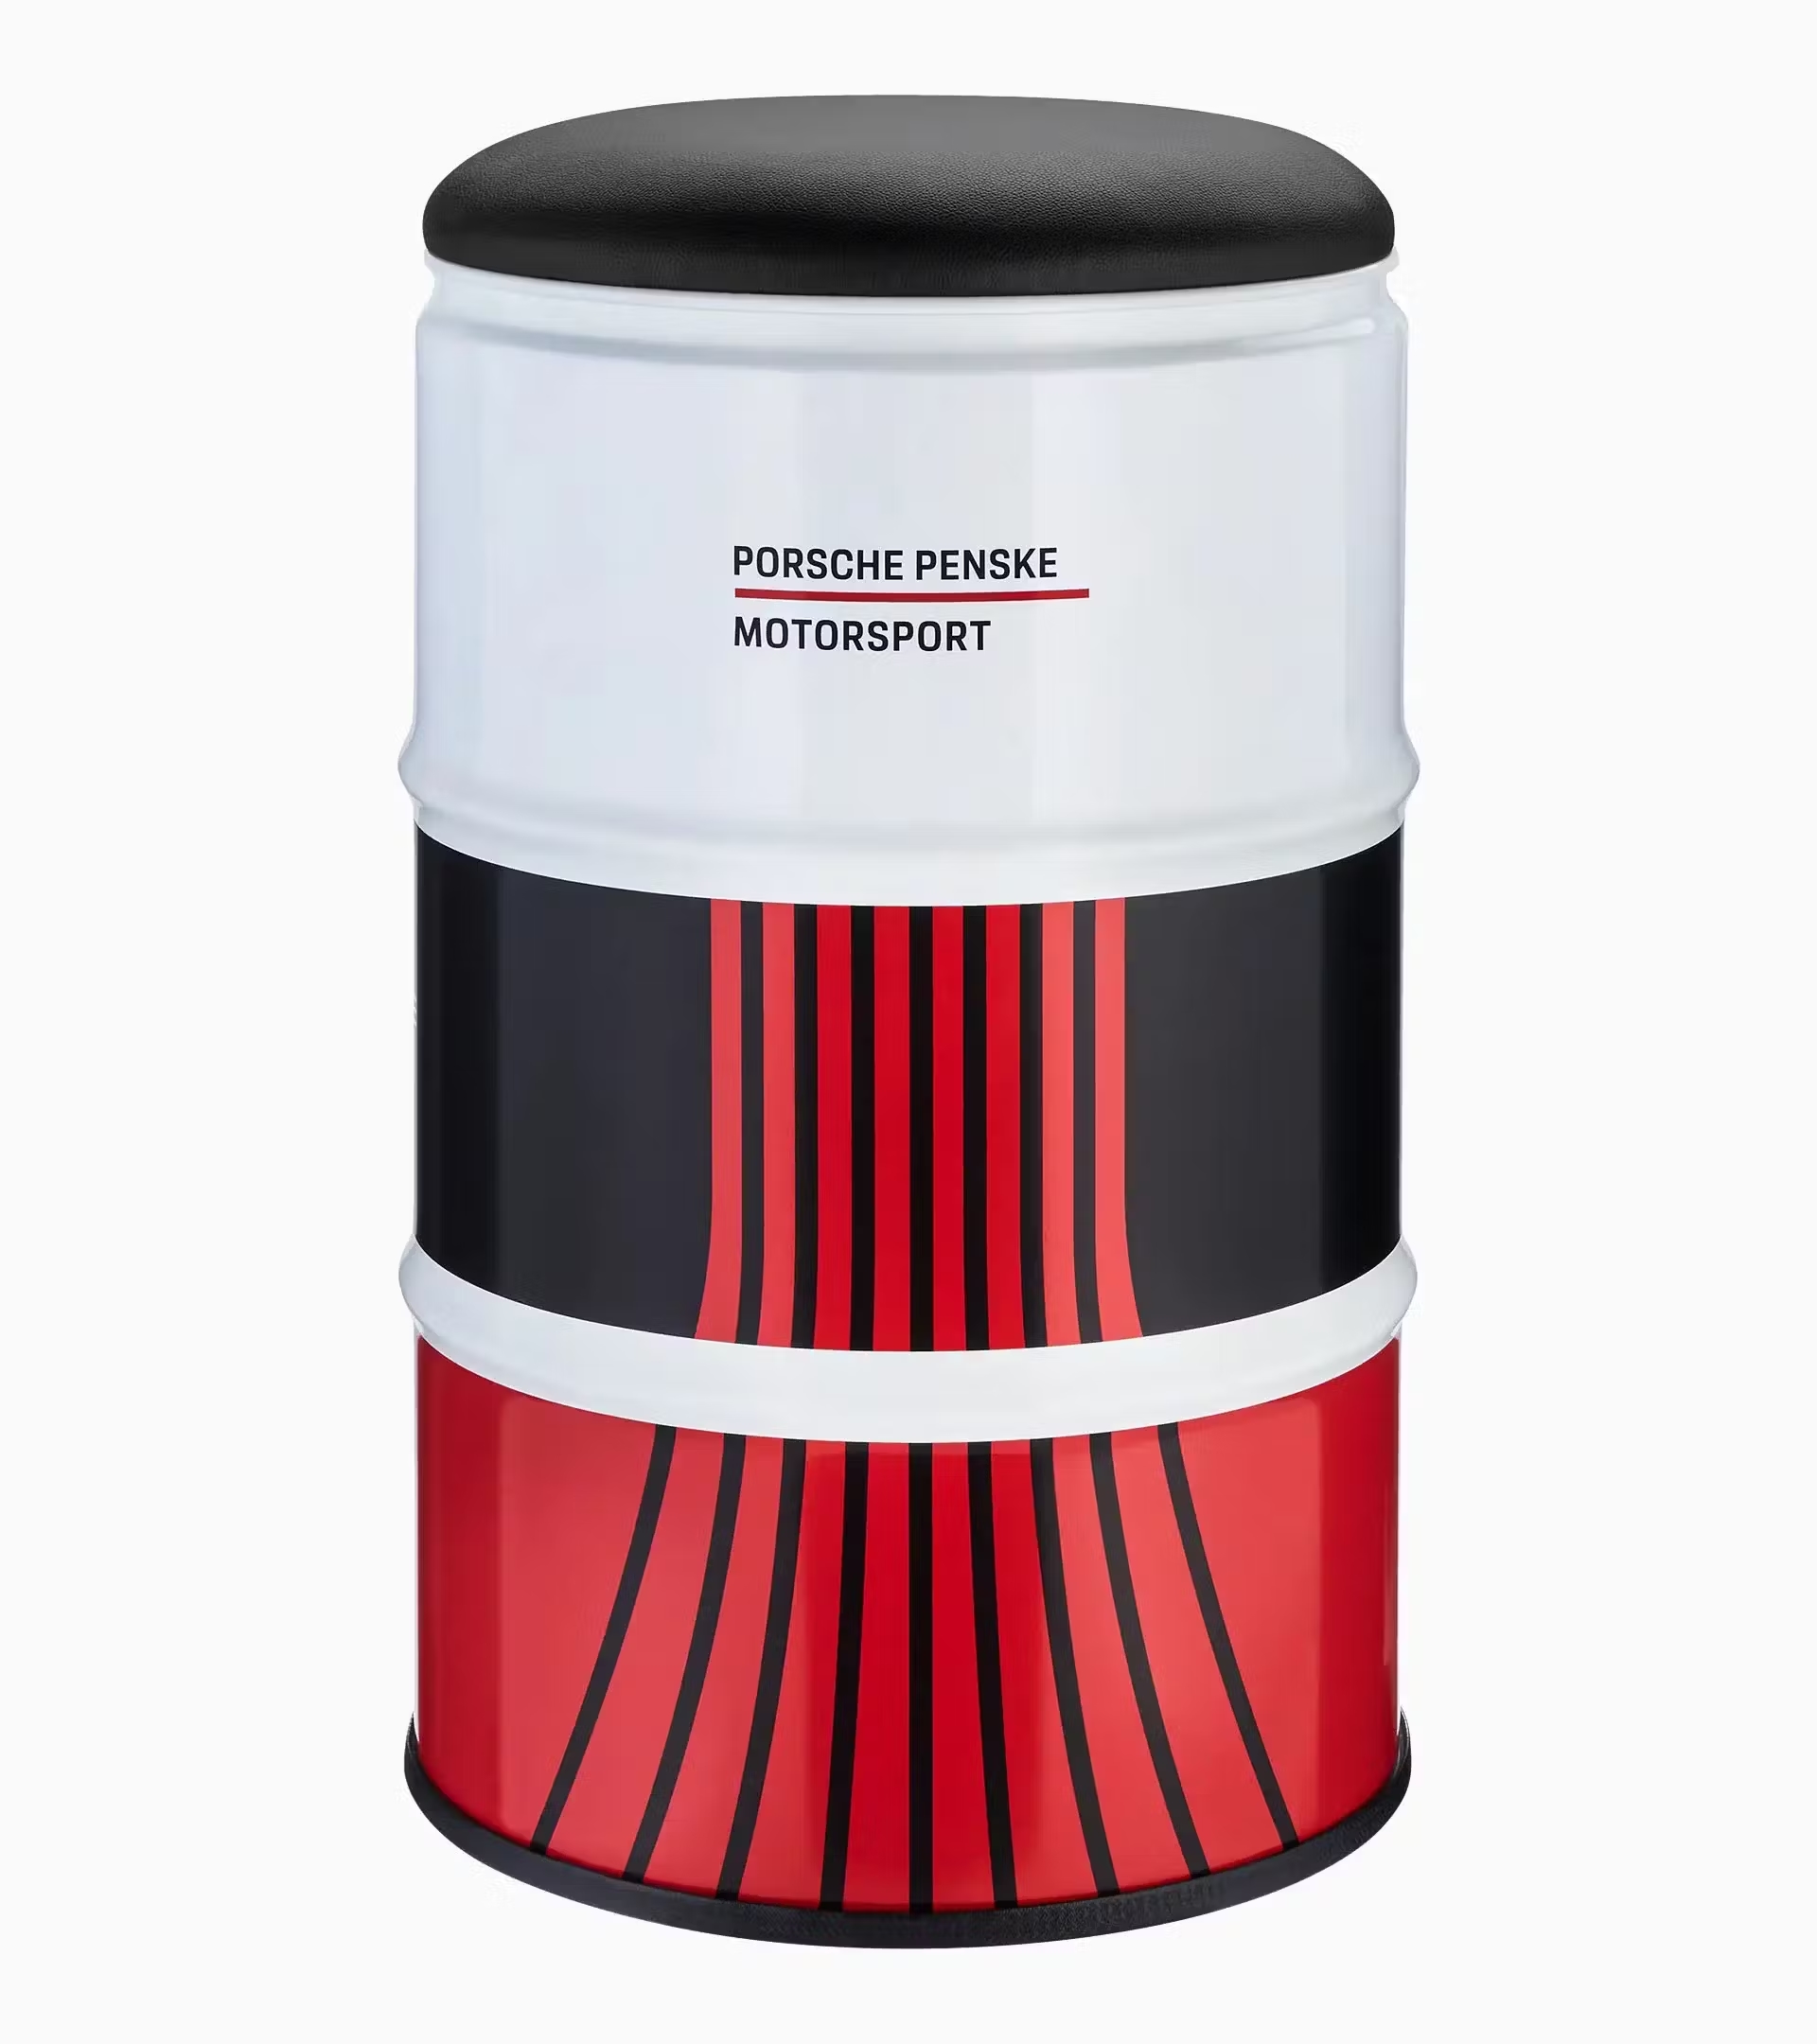 Porsche Siège-baril – Porsche Penske Motorsport